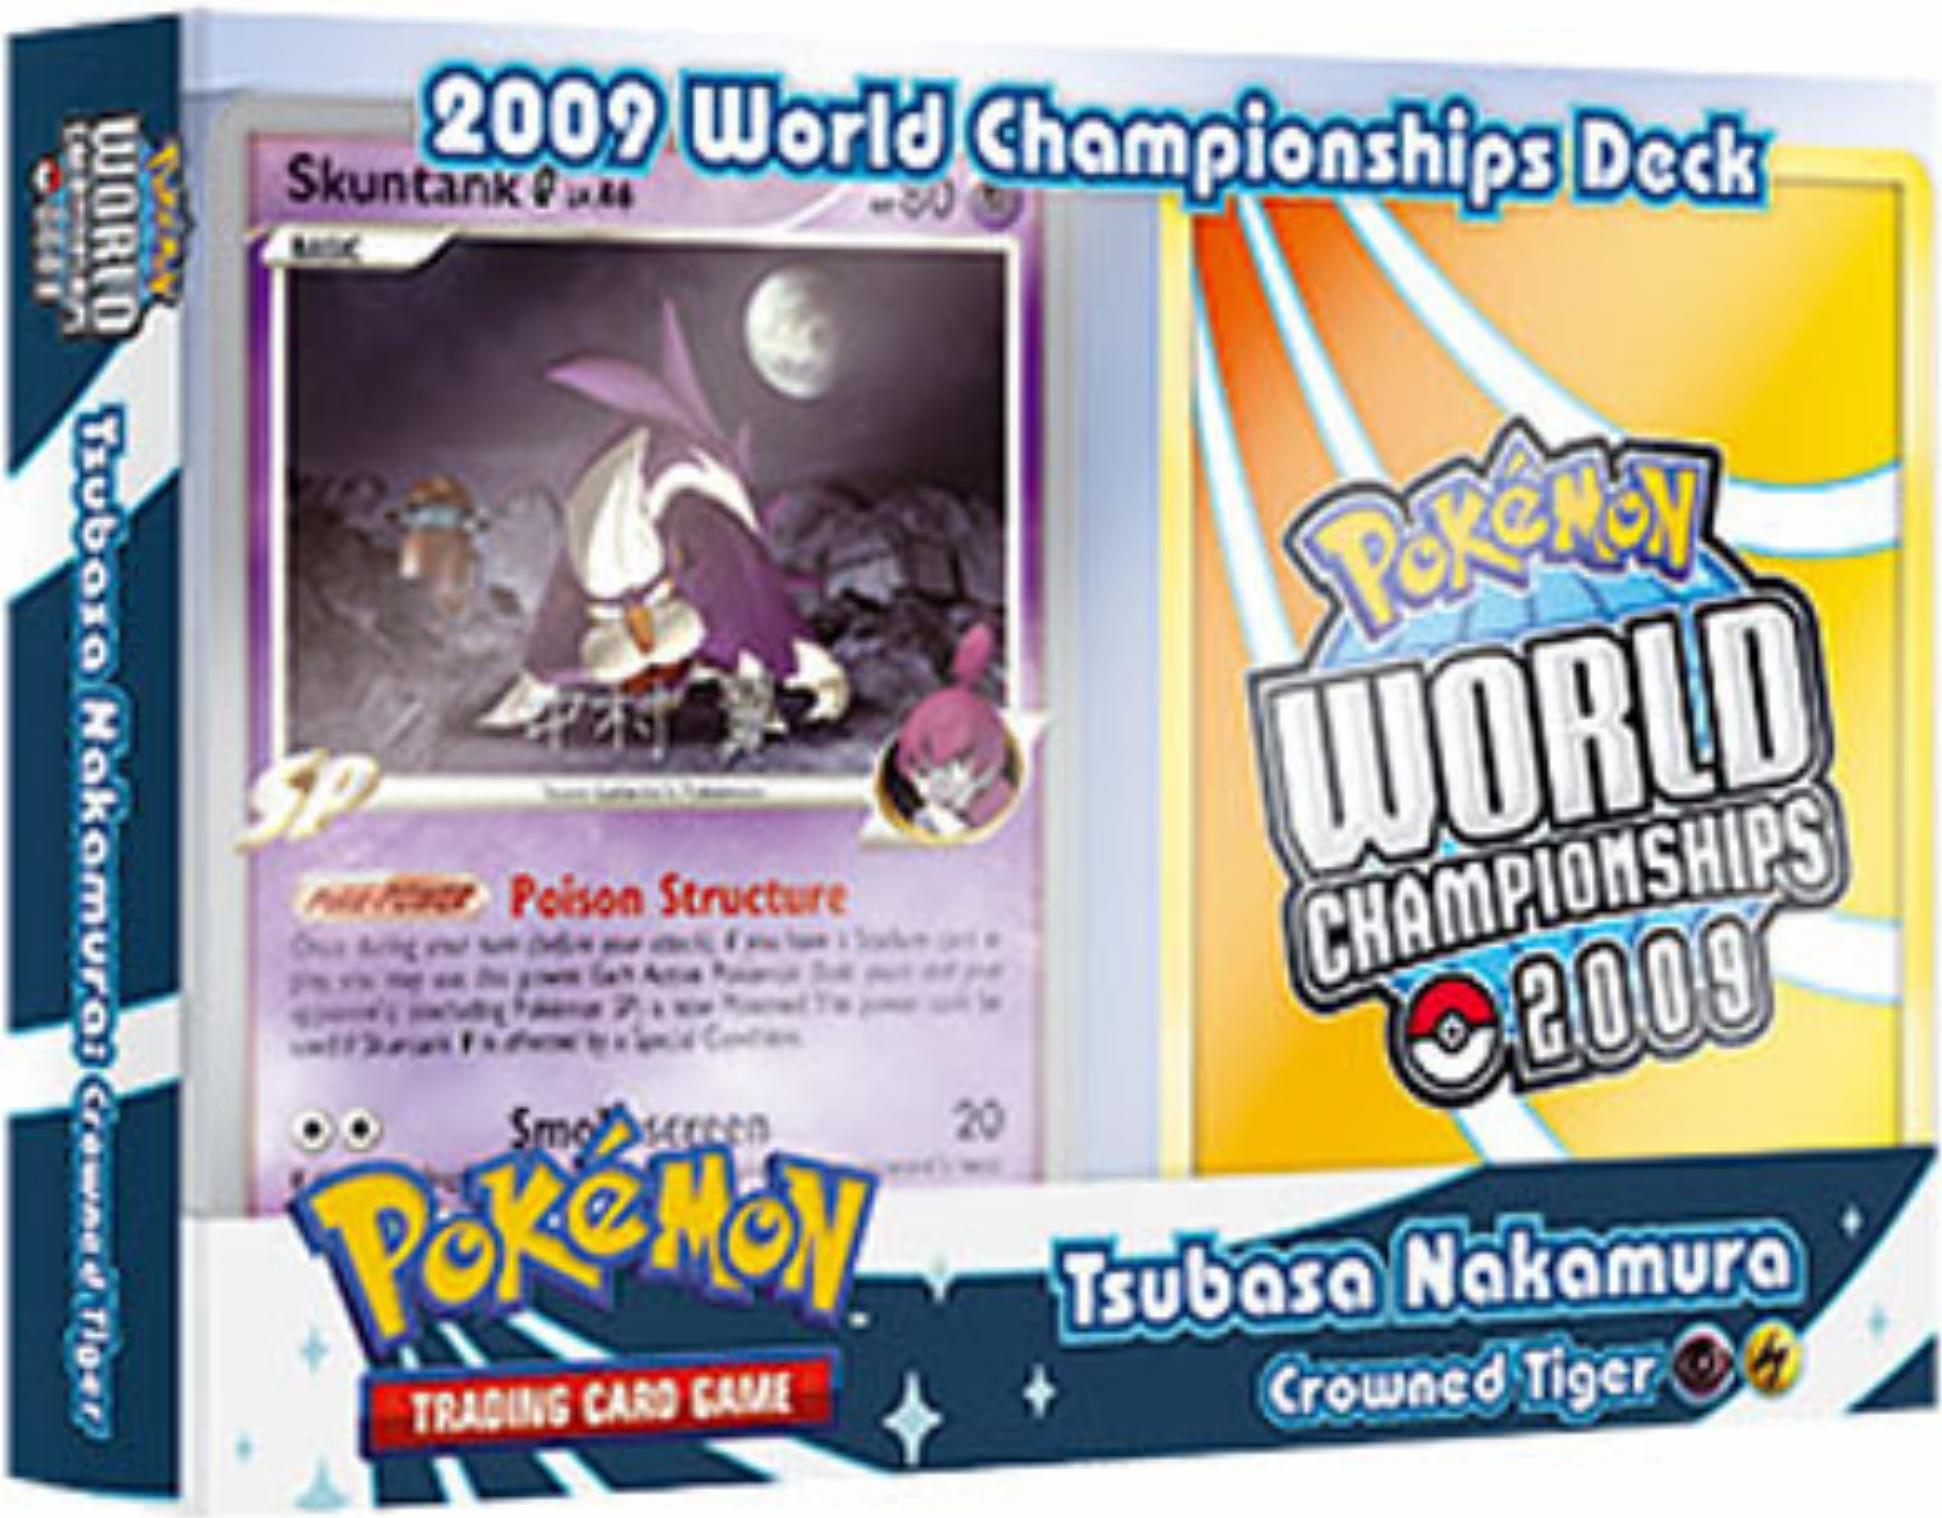 2009 World Championships Deck (Crowned Tiger - Tsubasa Kamura) | GrognardGamesBatavia